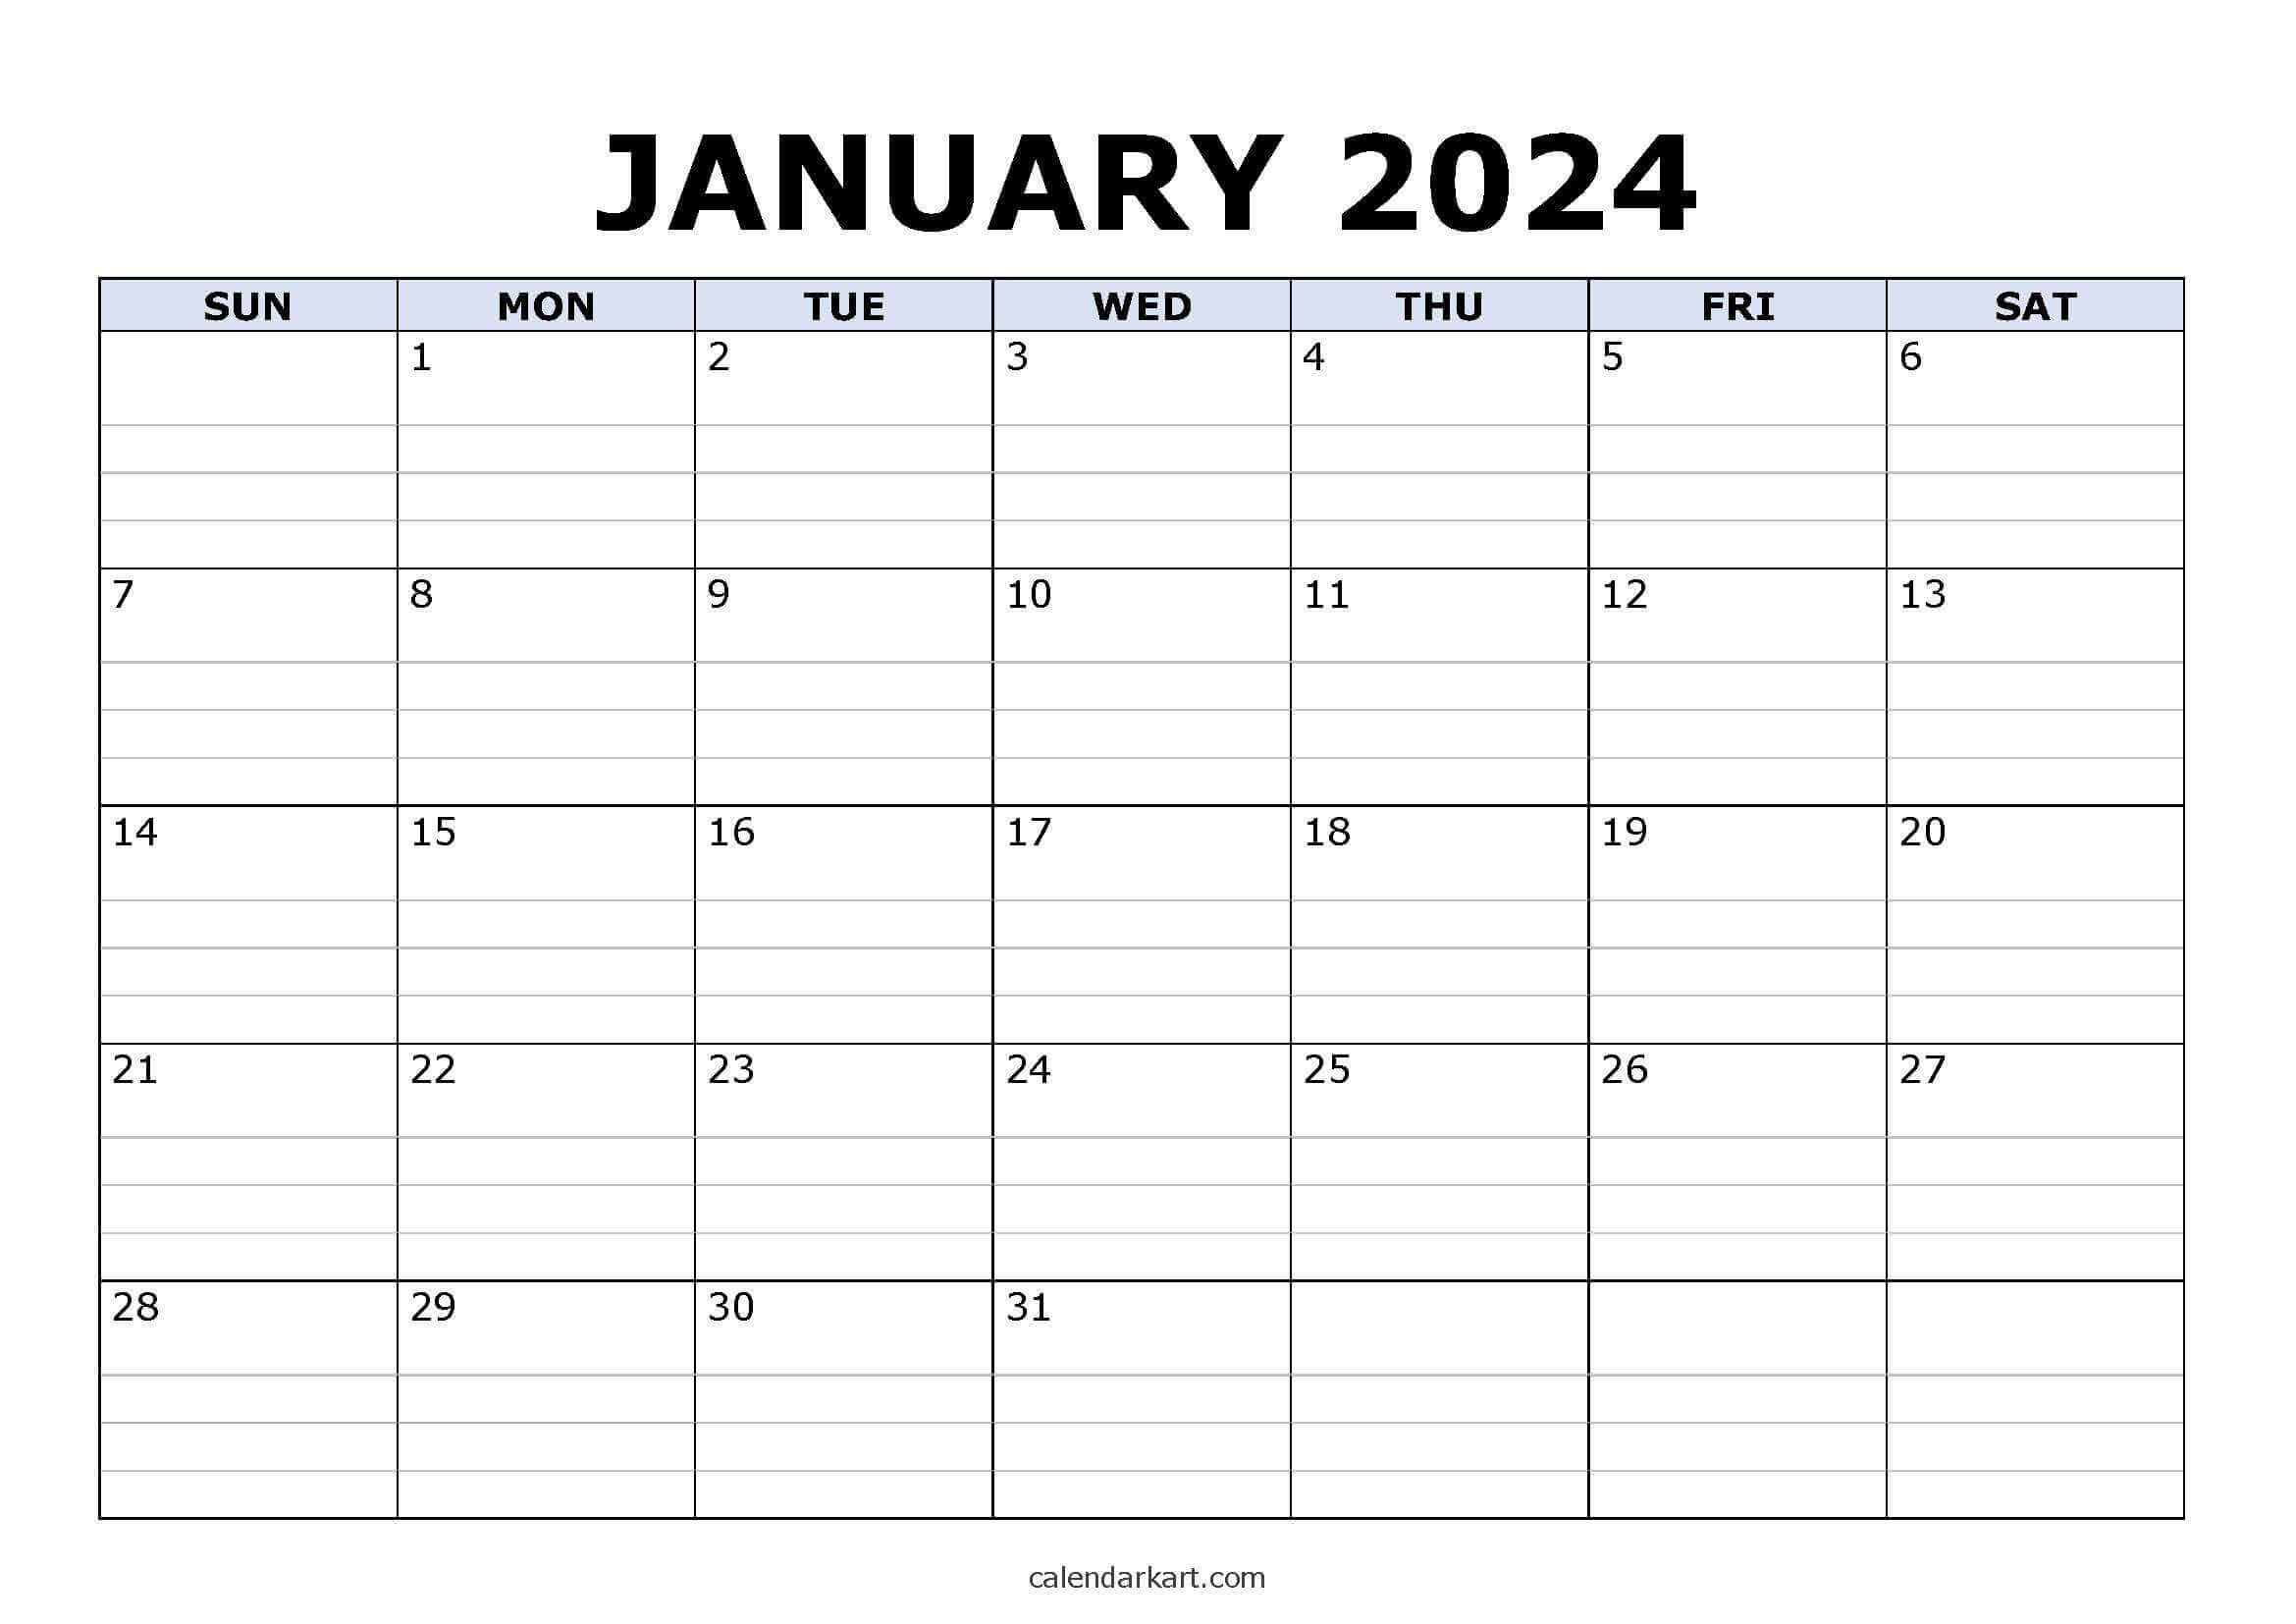 Free Printable January 2024 Calendars - Calendarkart | Free Printable Calendar 2024 Monthly With Lines